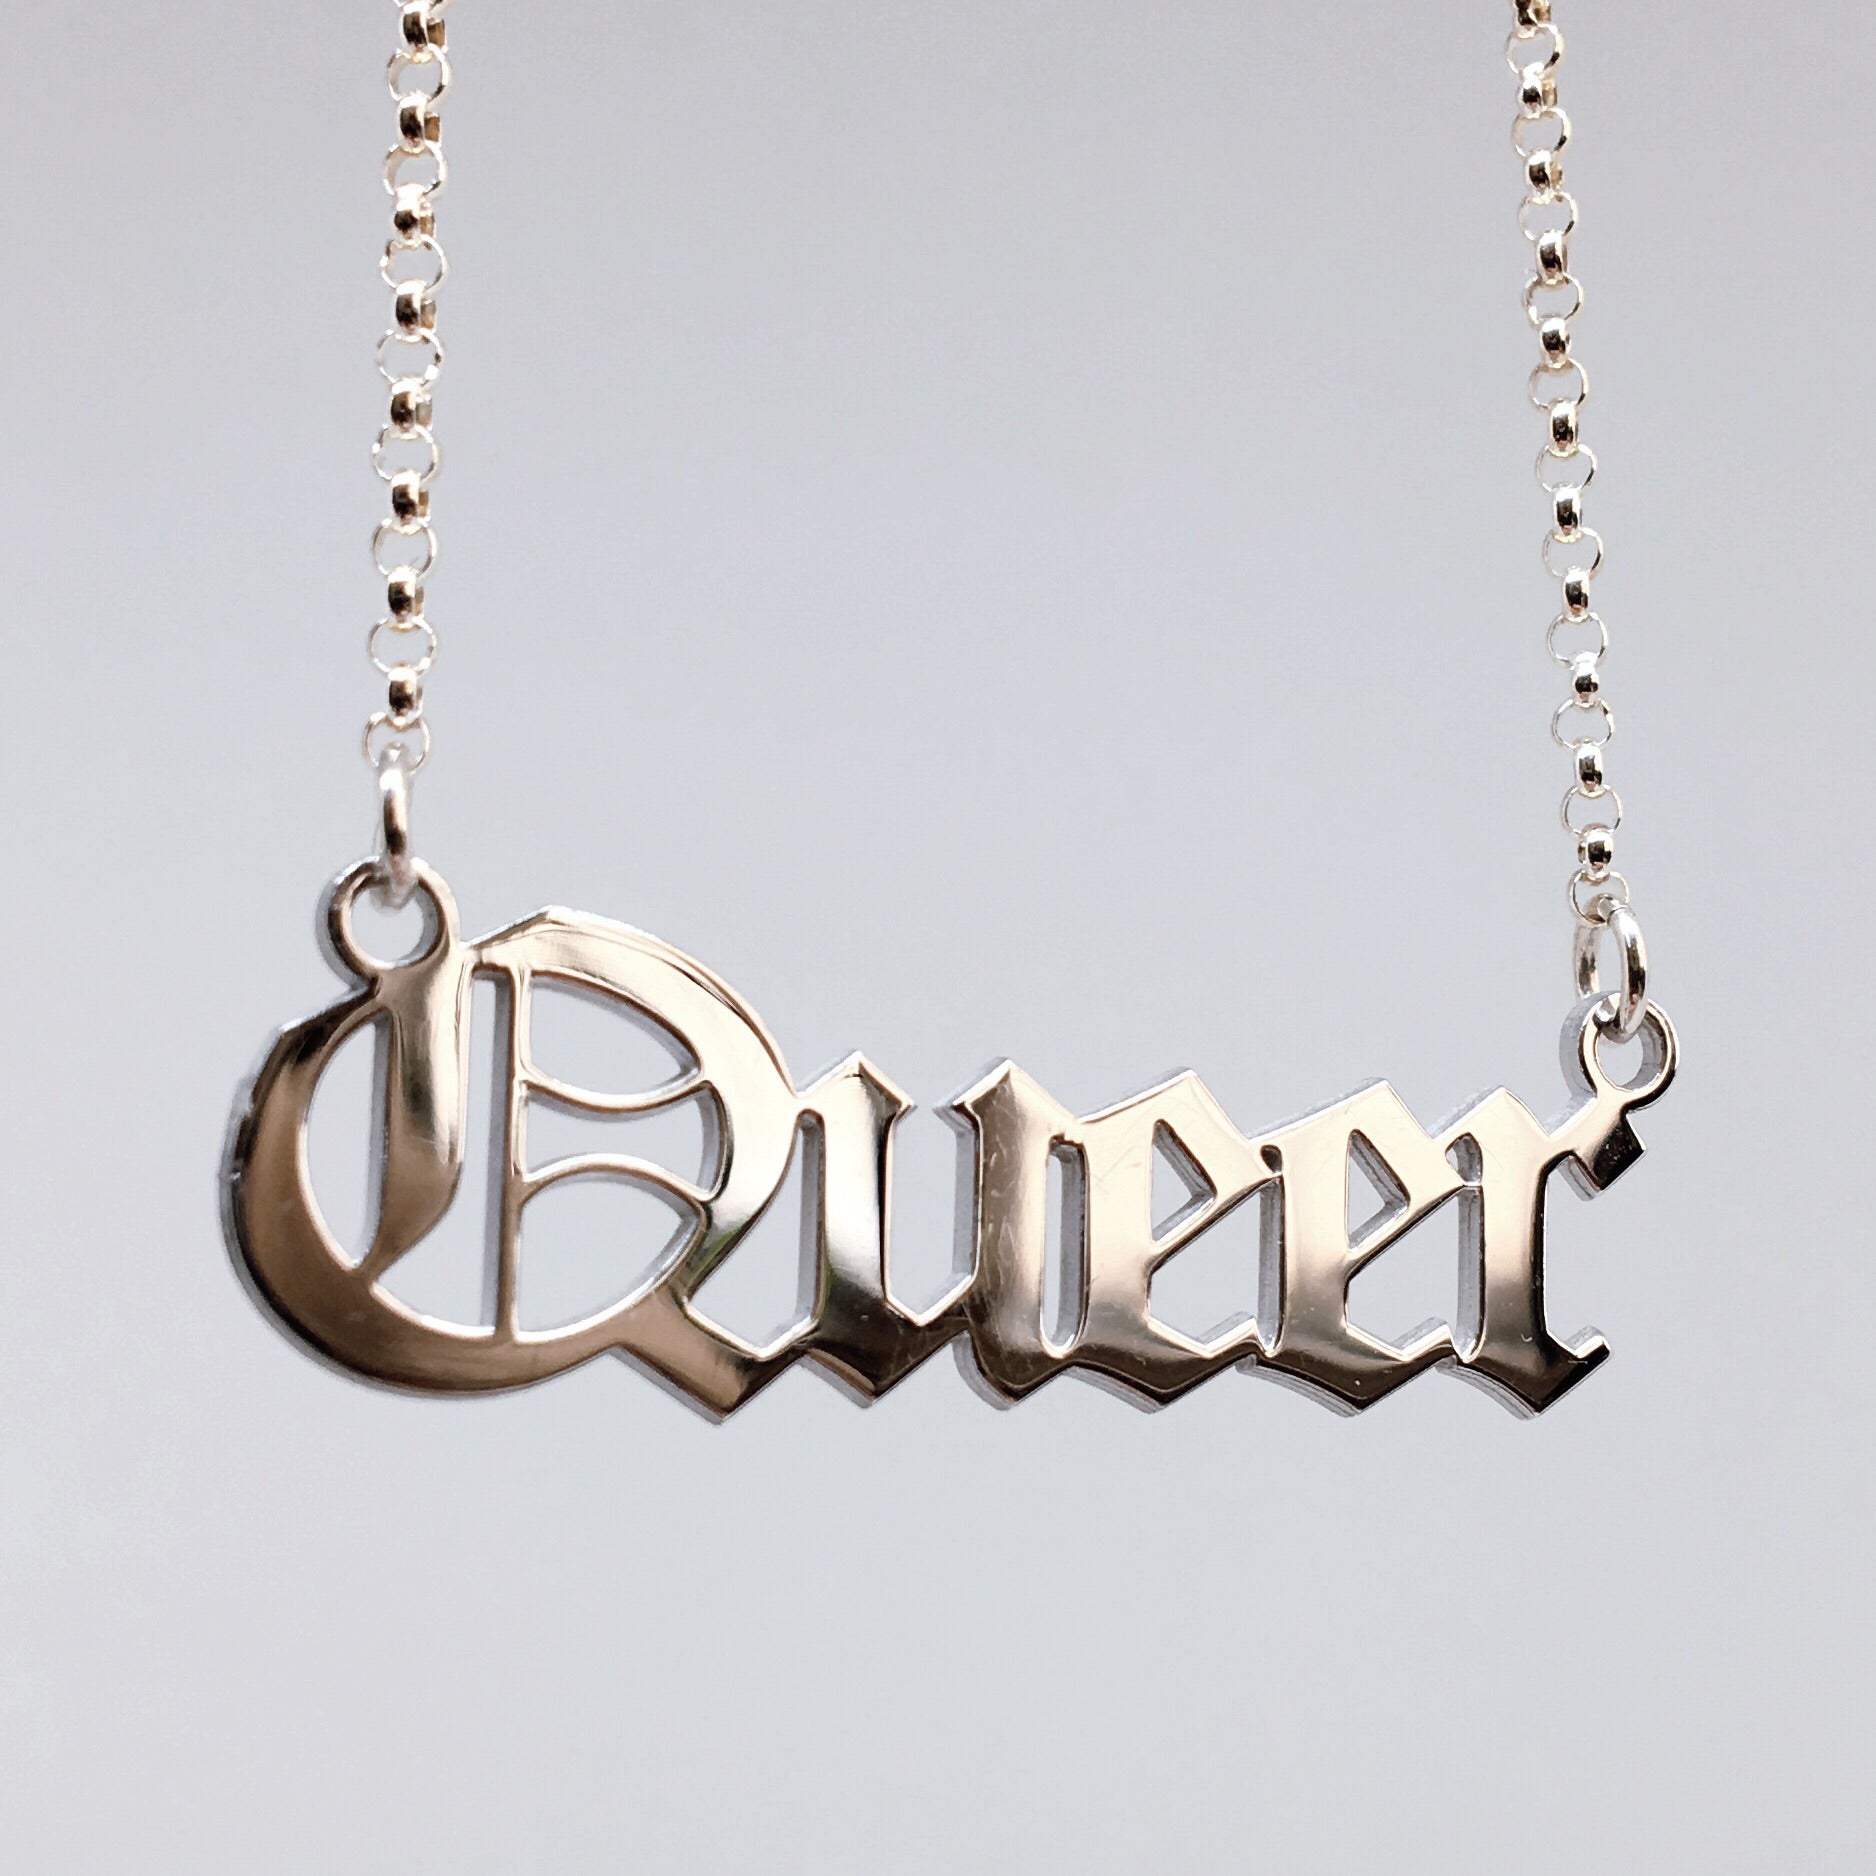 Queer blackletter nameplate necklace in sterling silver